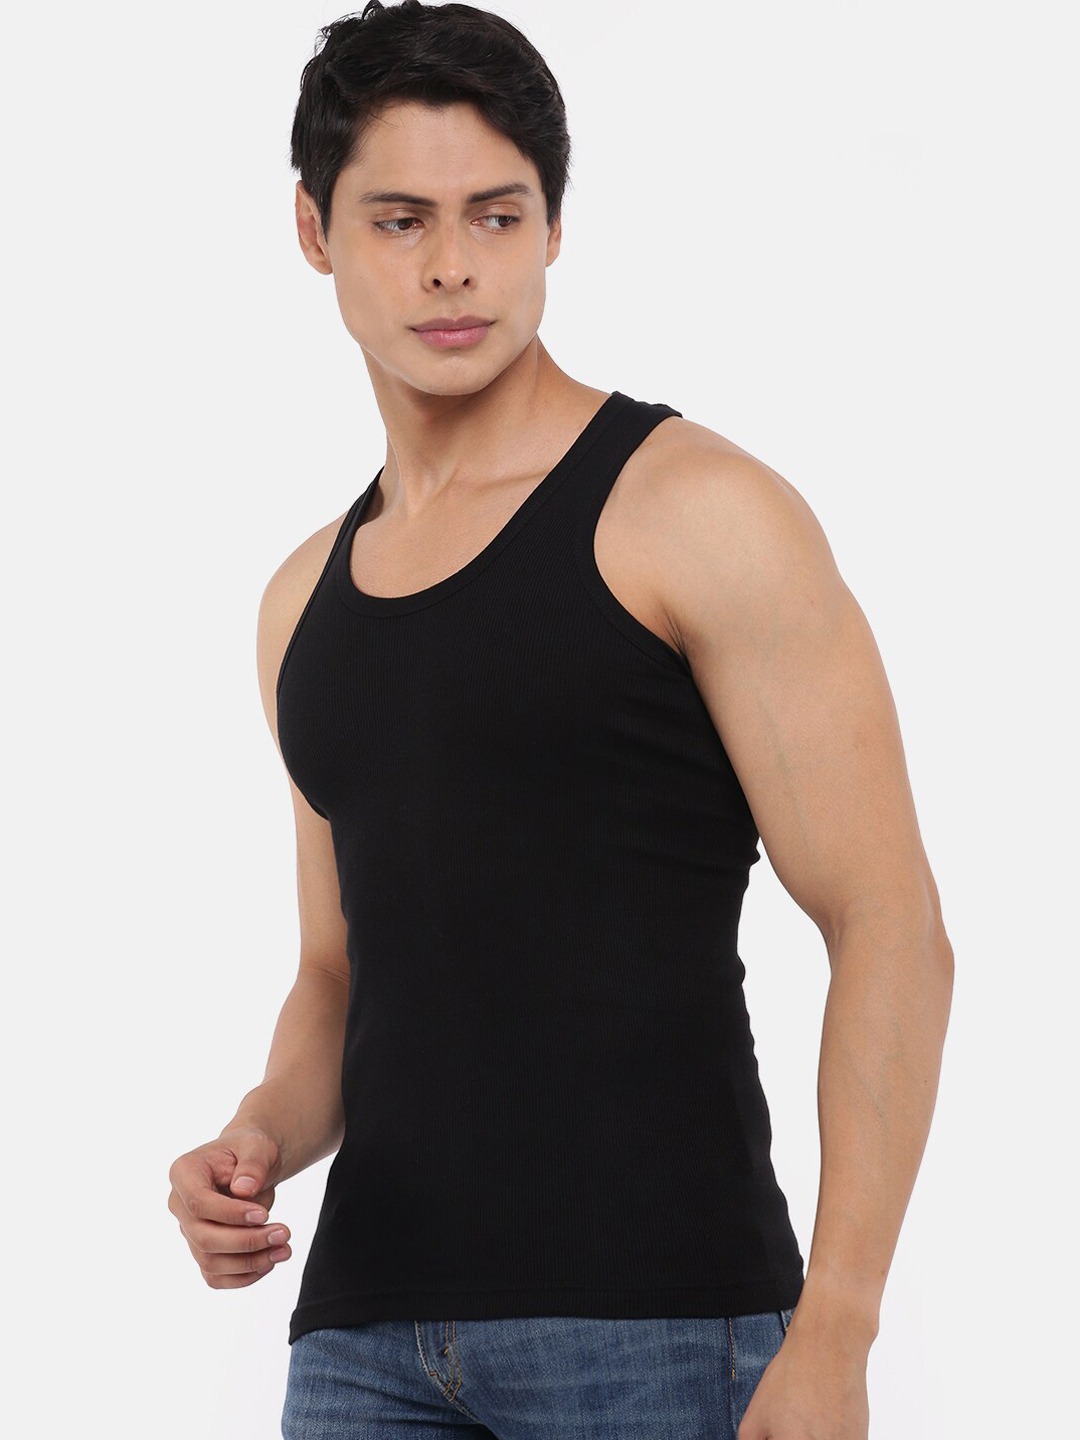 Clothing Innerwear Vests | Dollar Bigboss Men Pack of 10 Black Solid Pure Super Combed Cotton Innerwear Vests - NE02005